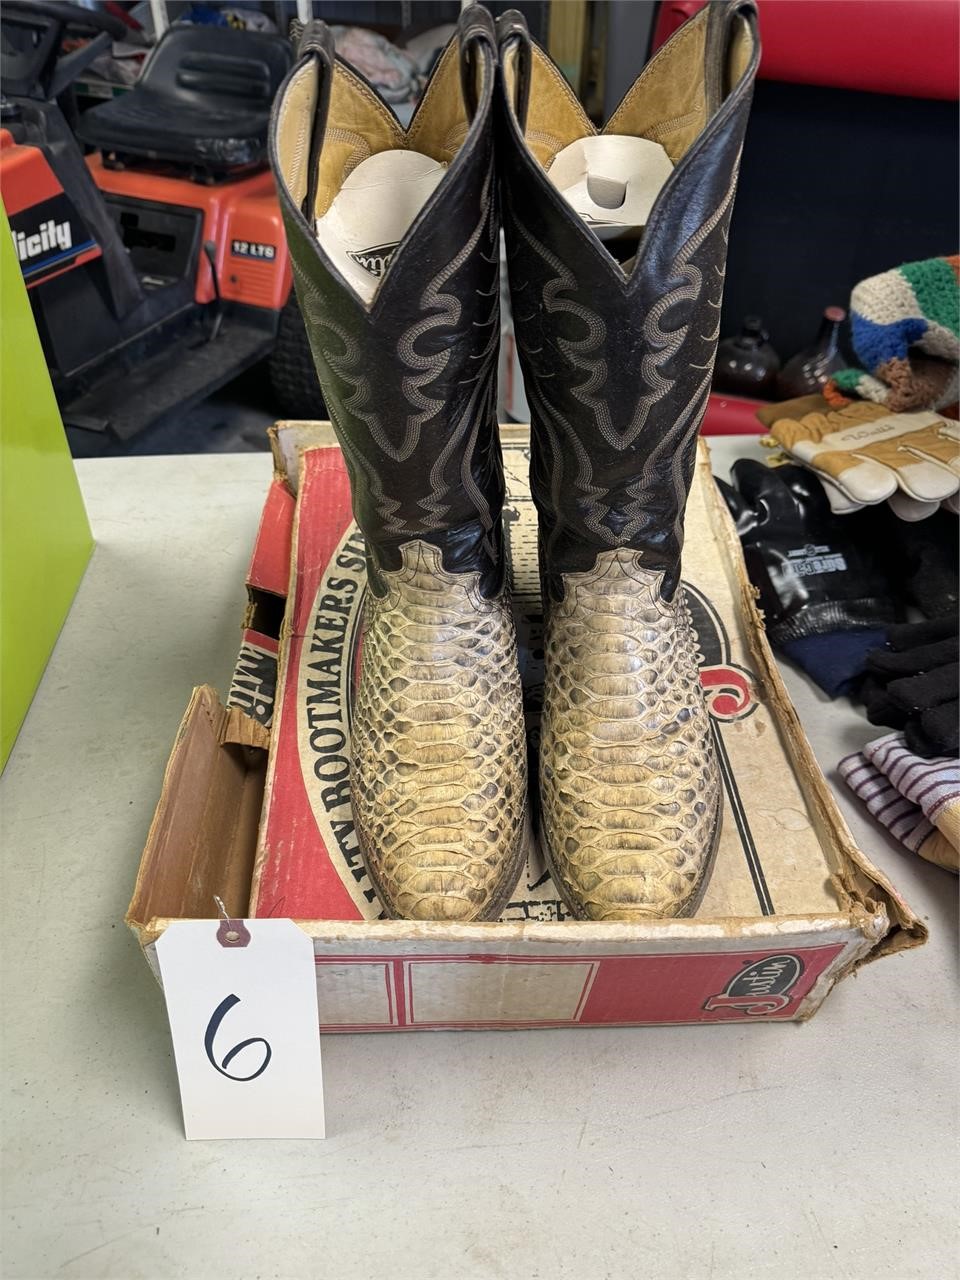 Snakeskin Justin Boots, Men's Size 11